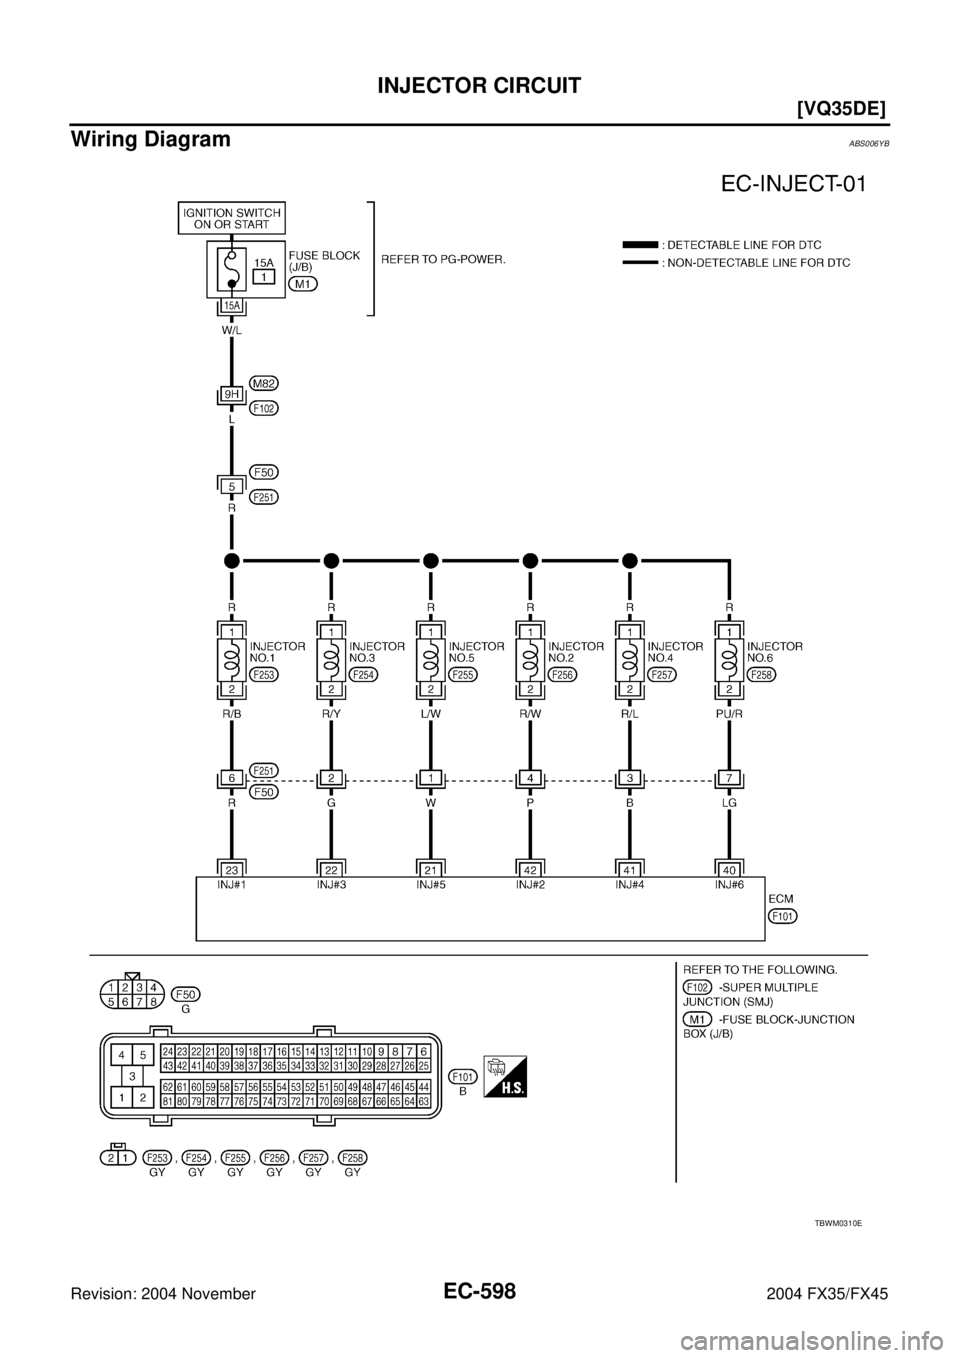 INFINITI FX35 2004  Service Manual EC-598
[VQ35DE]
INJECTOR CIRCUIT
Revision: 2004 November 2004 FX35/FX45
Wiring DiagramABS006YB
TBWM0310E 